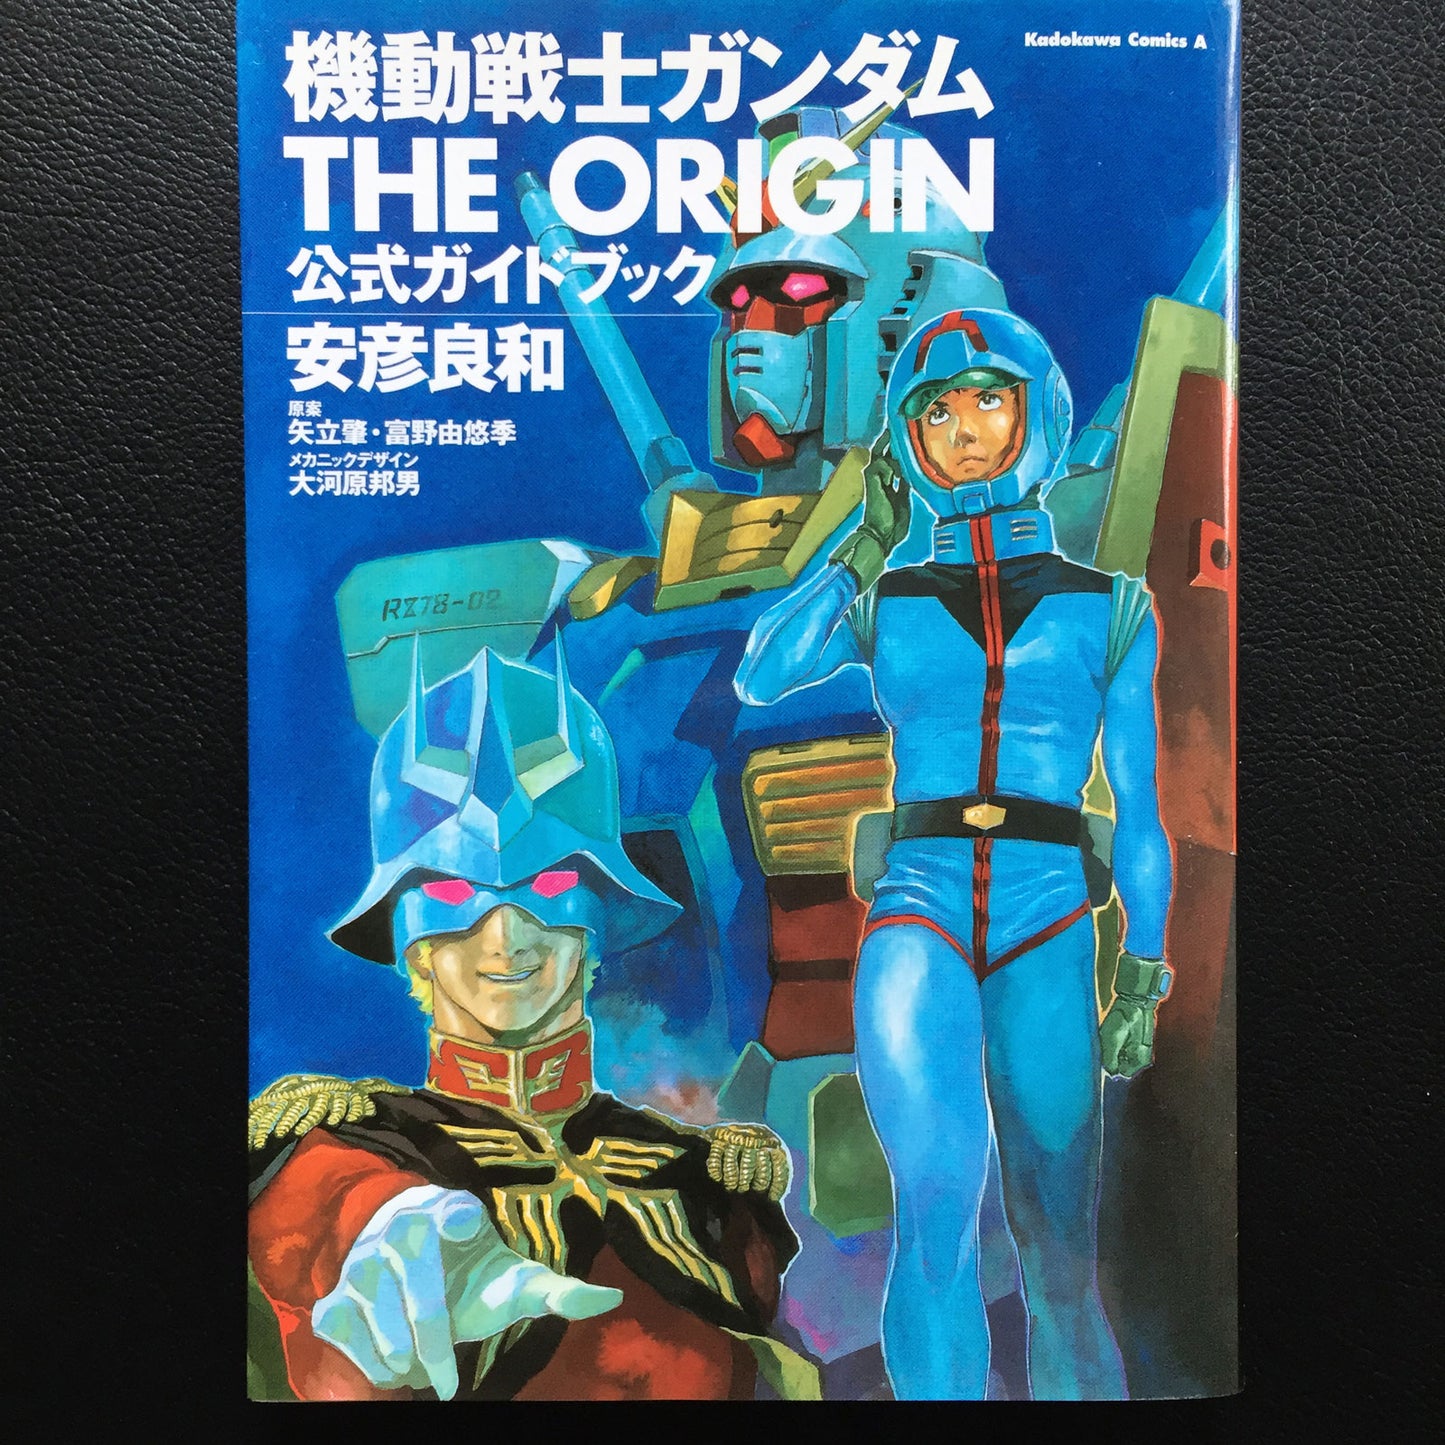 Mobile Suit Gundam The Origin Official Guide Book